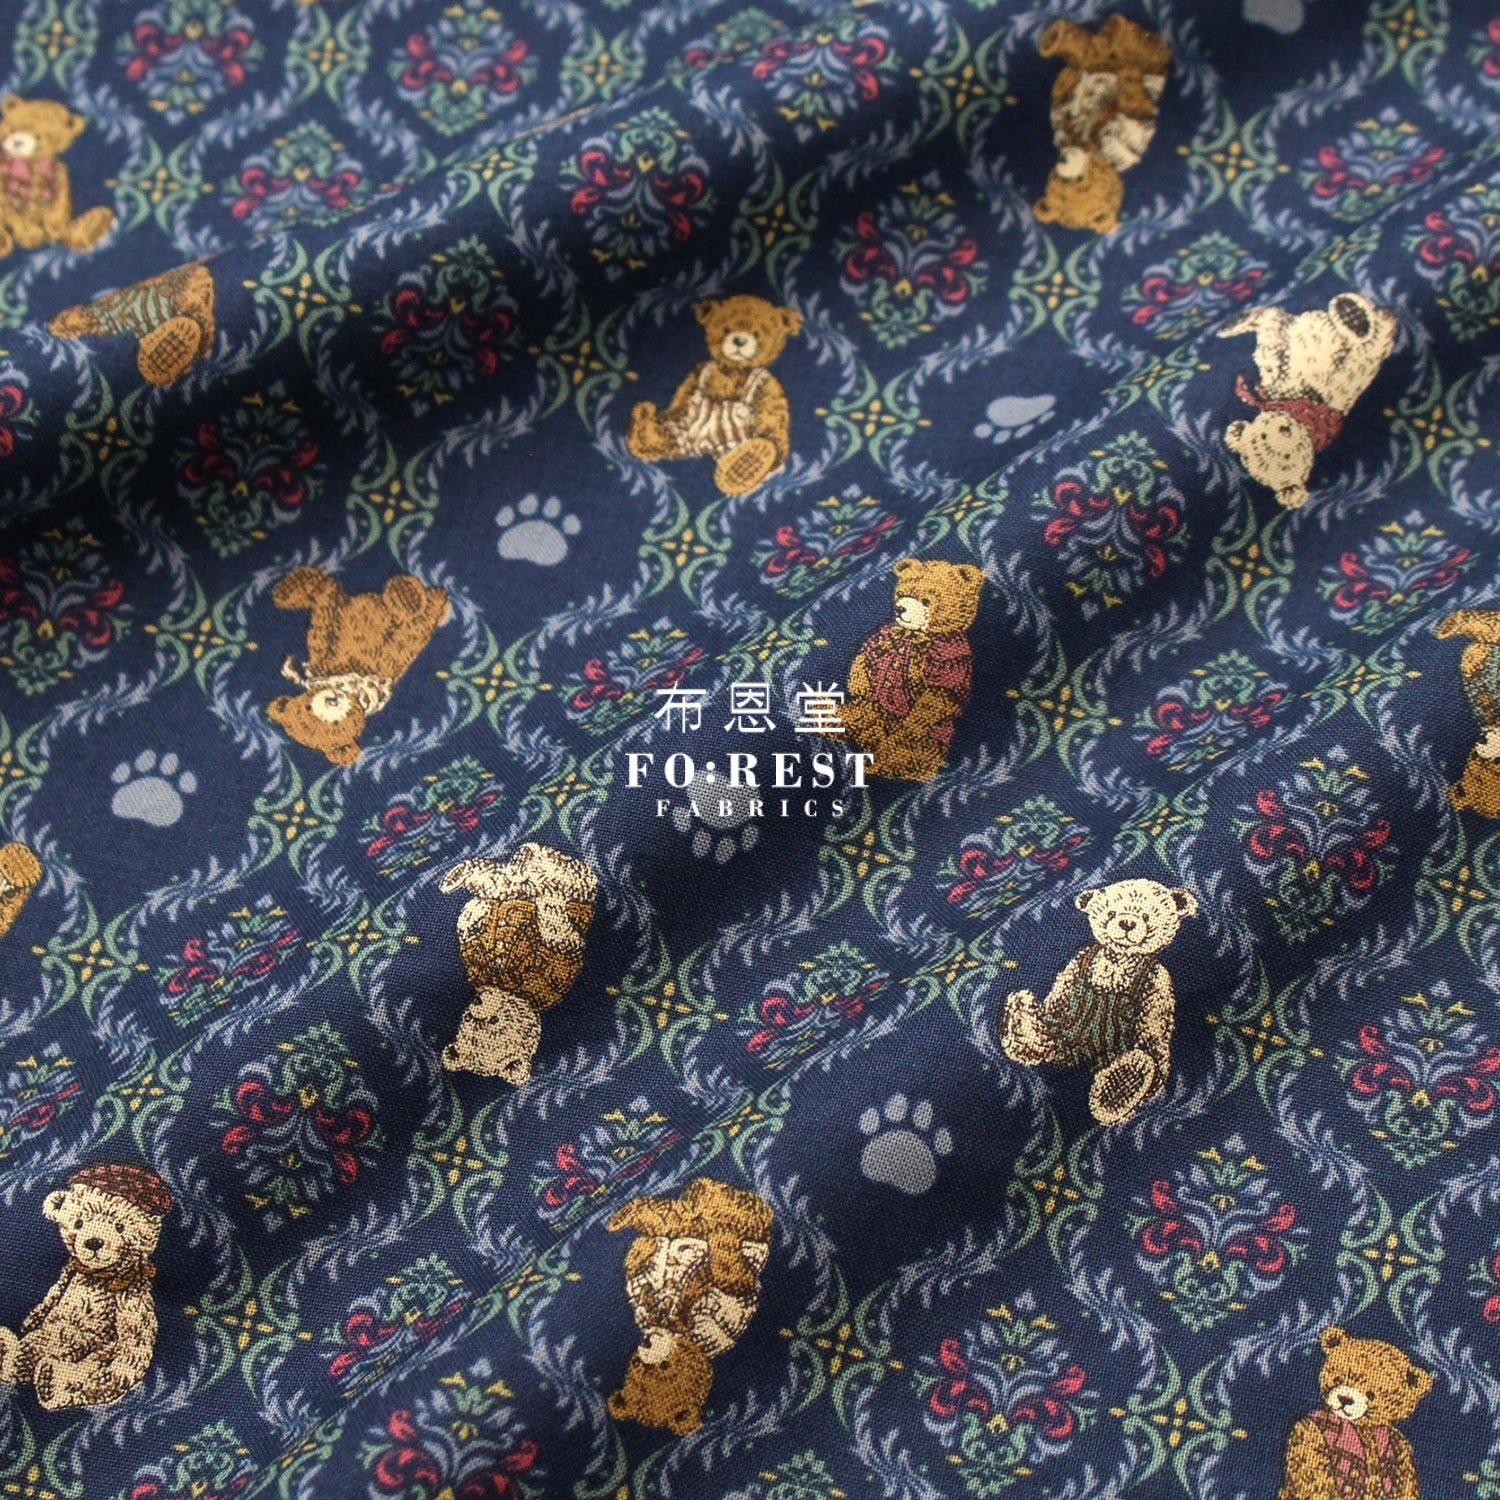 Cotton - Sewing Teddy Bear Fabric Navy